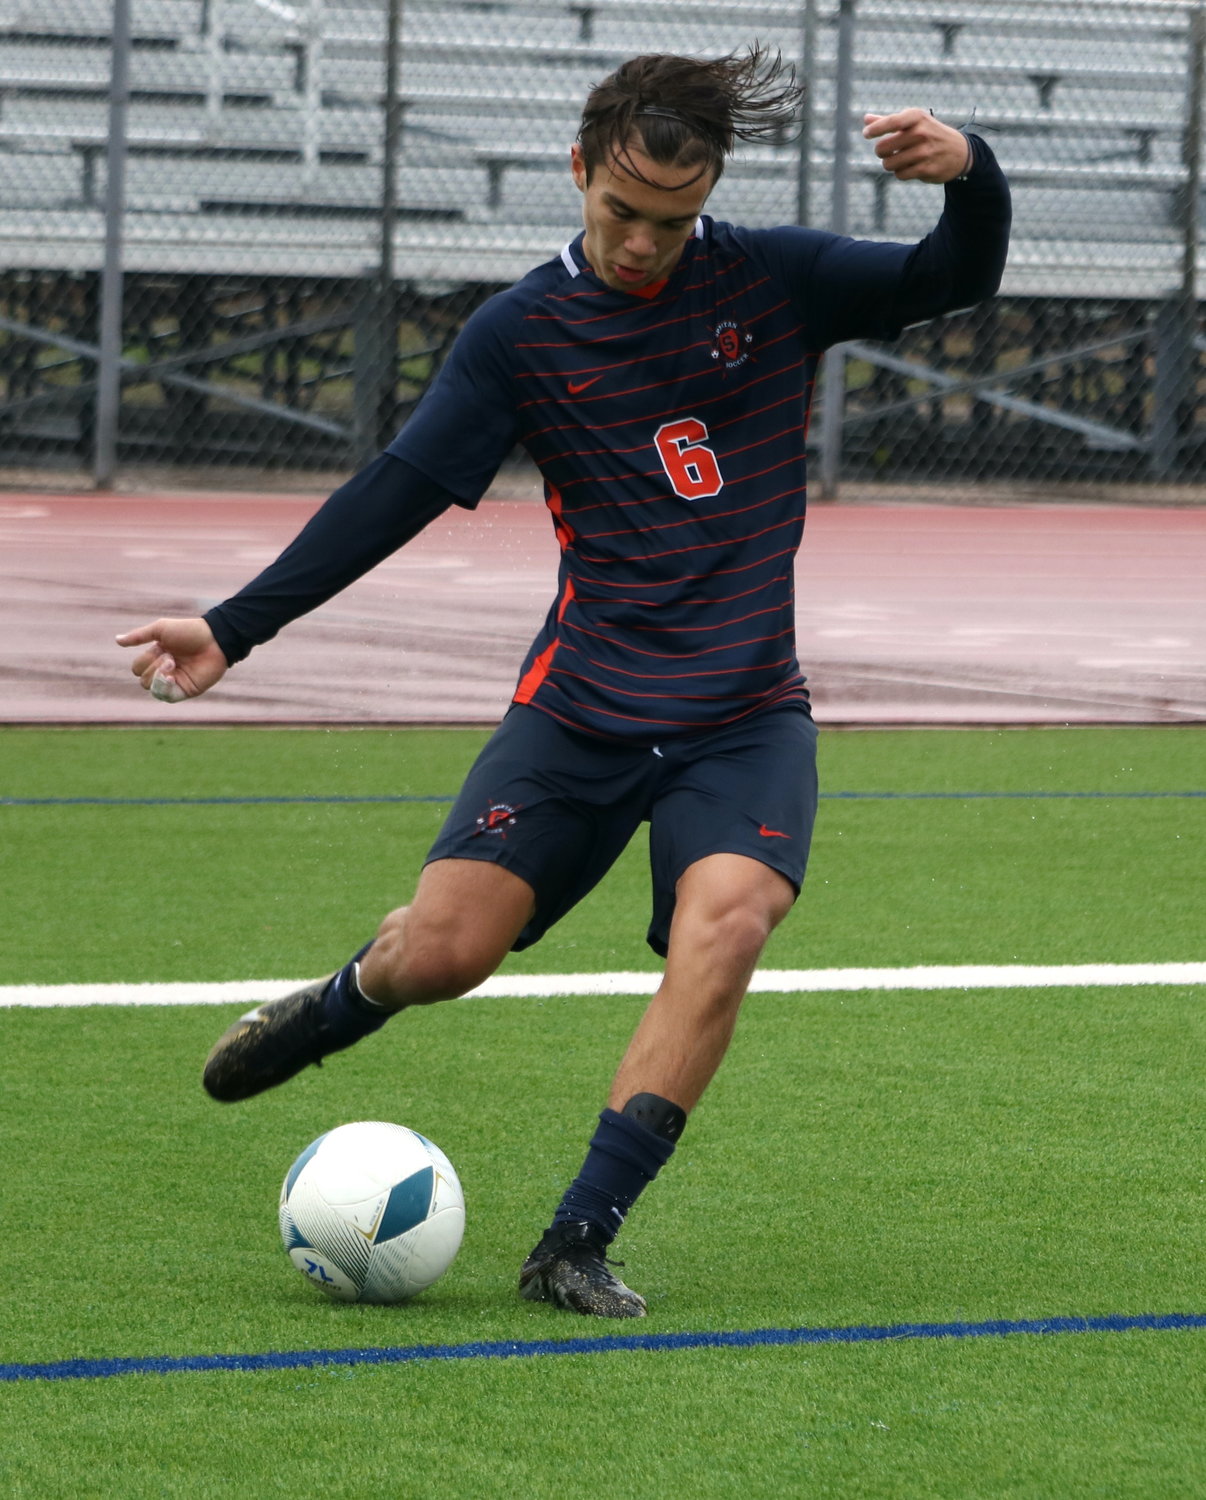 Kortay Koc crosses a ball during Saturday's game between Seven Lakes and Mayde Creek at the Seven Lakes soccer field.